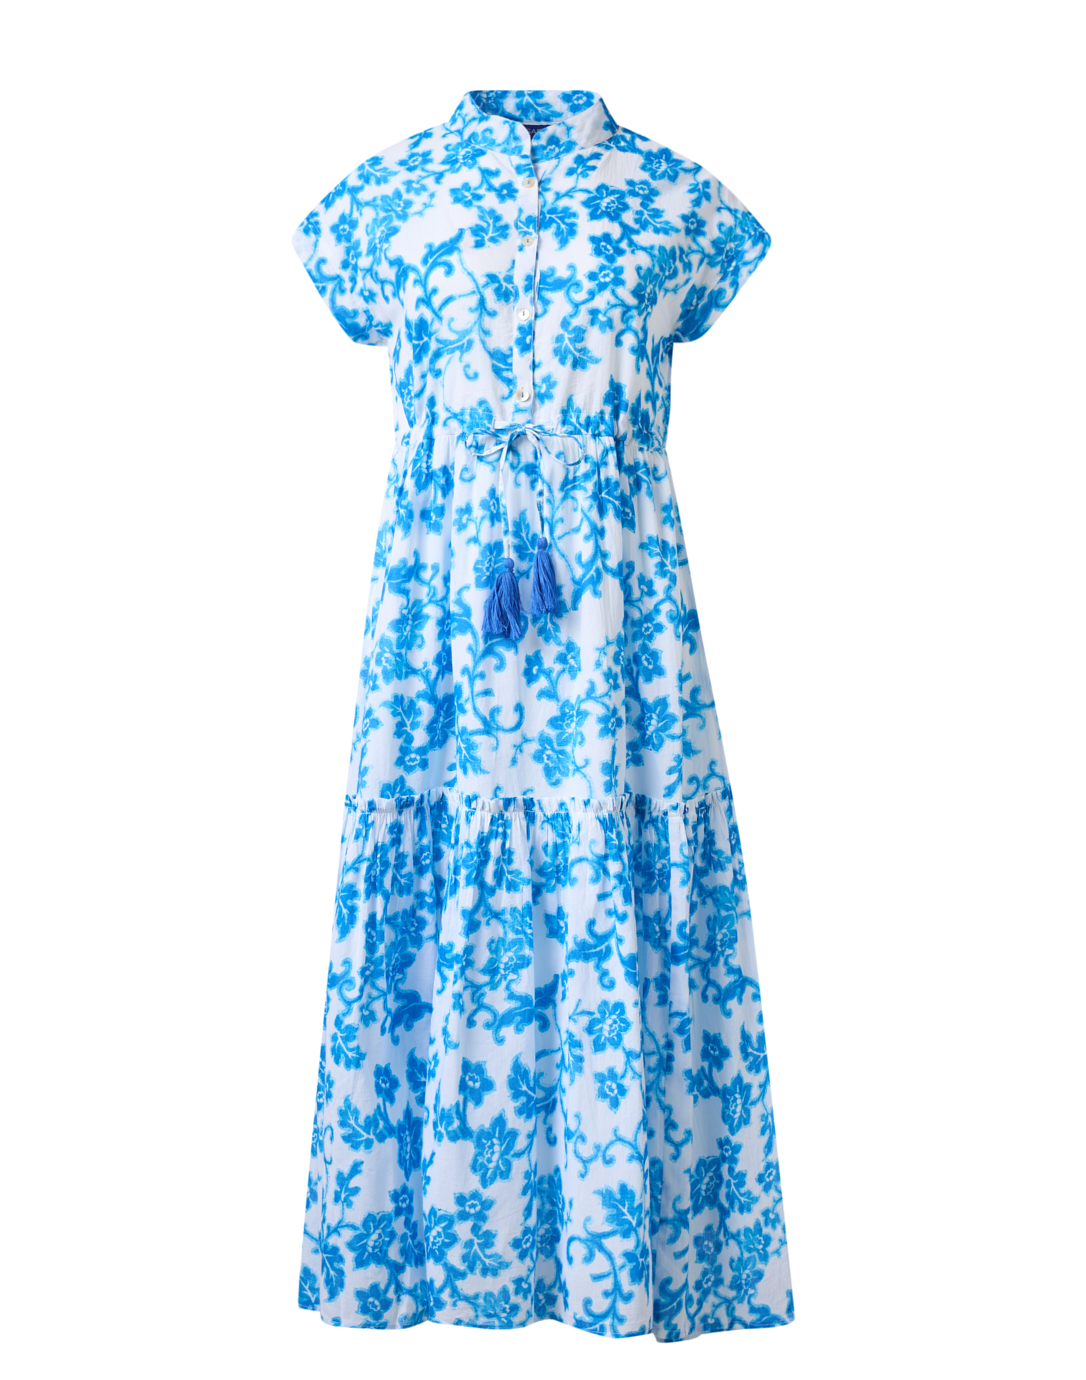 Mumi Blue Print Cotton Dress | Ro's Garden